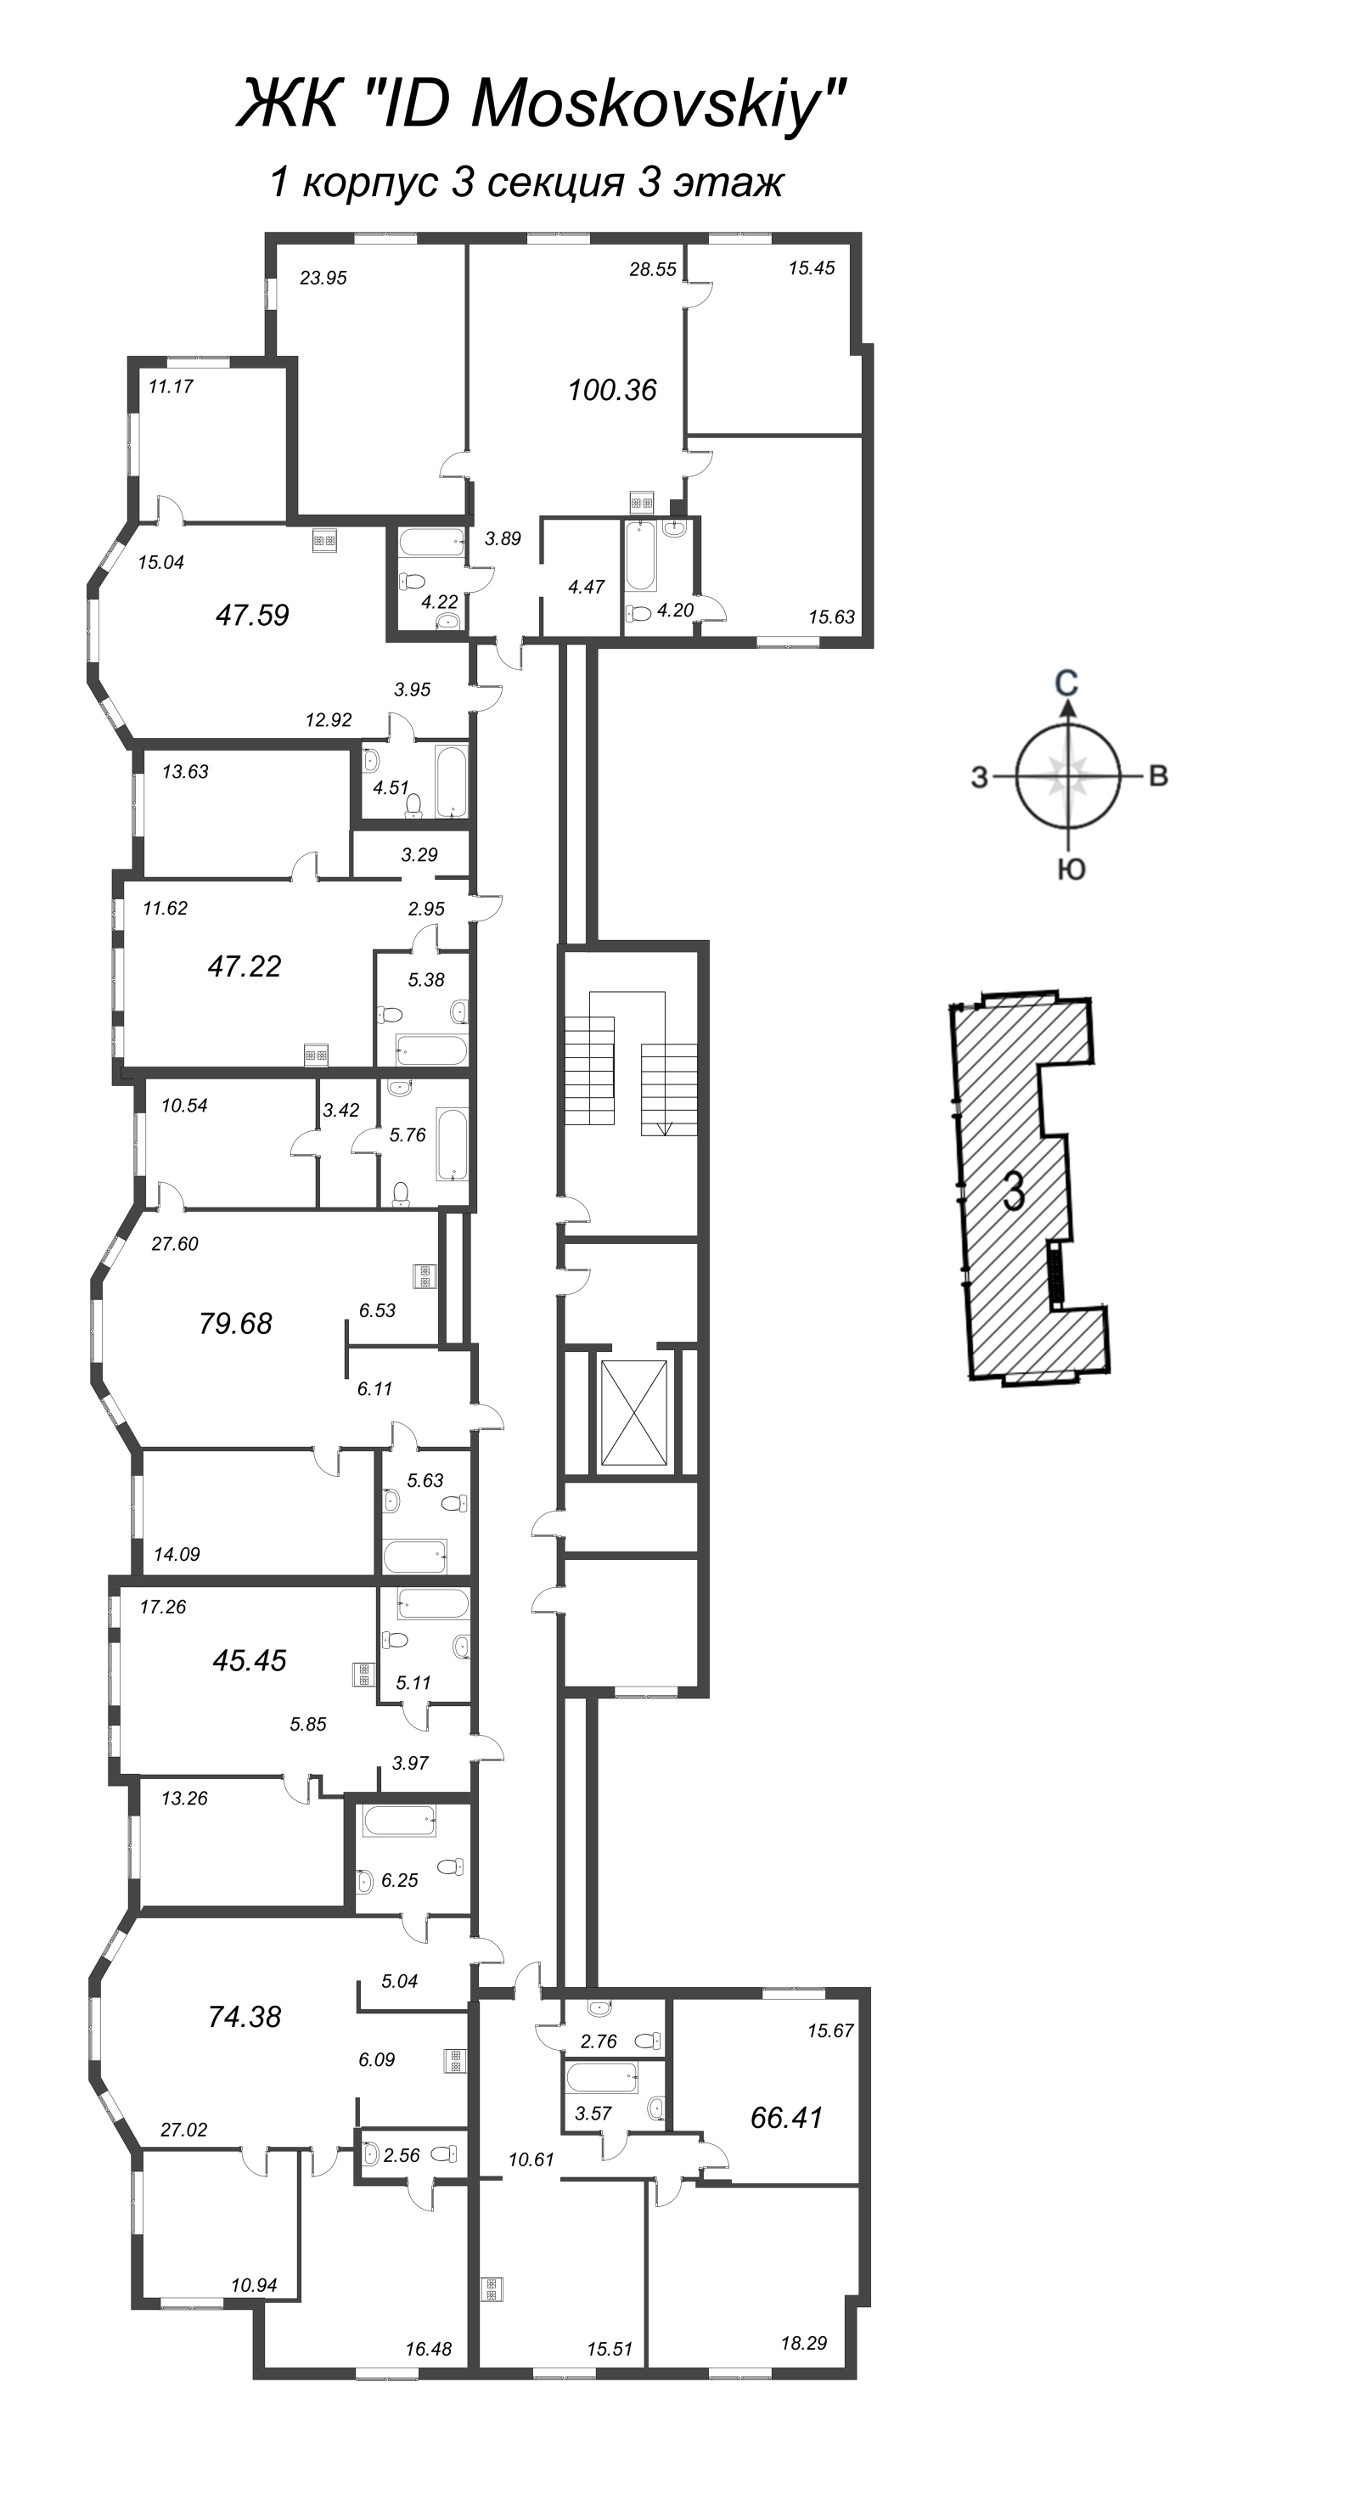 3-комнатная (Евро) квартира, 74.38 м² - планировка этажа